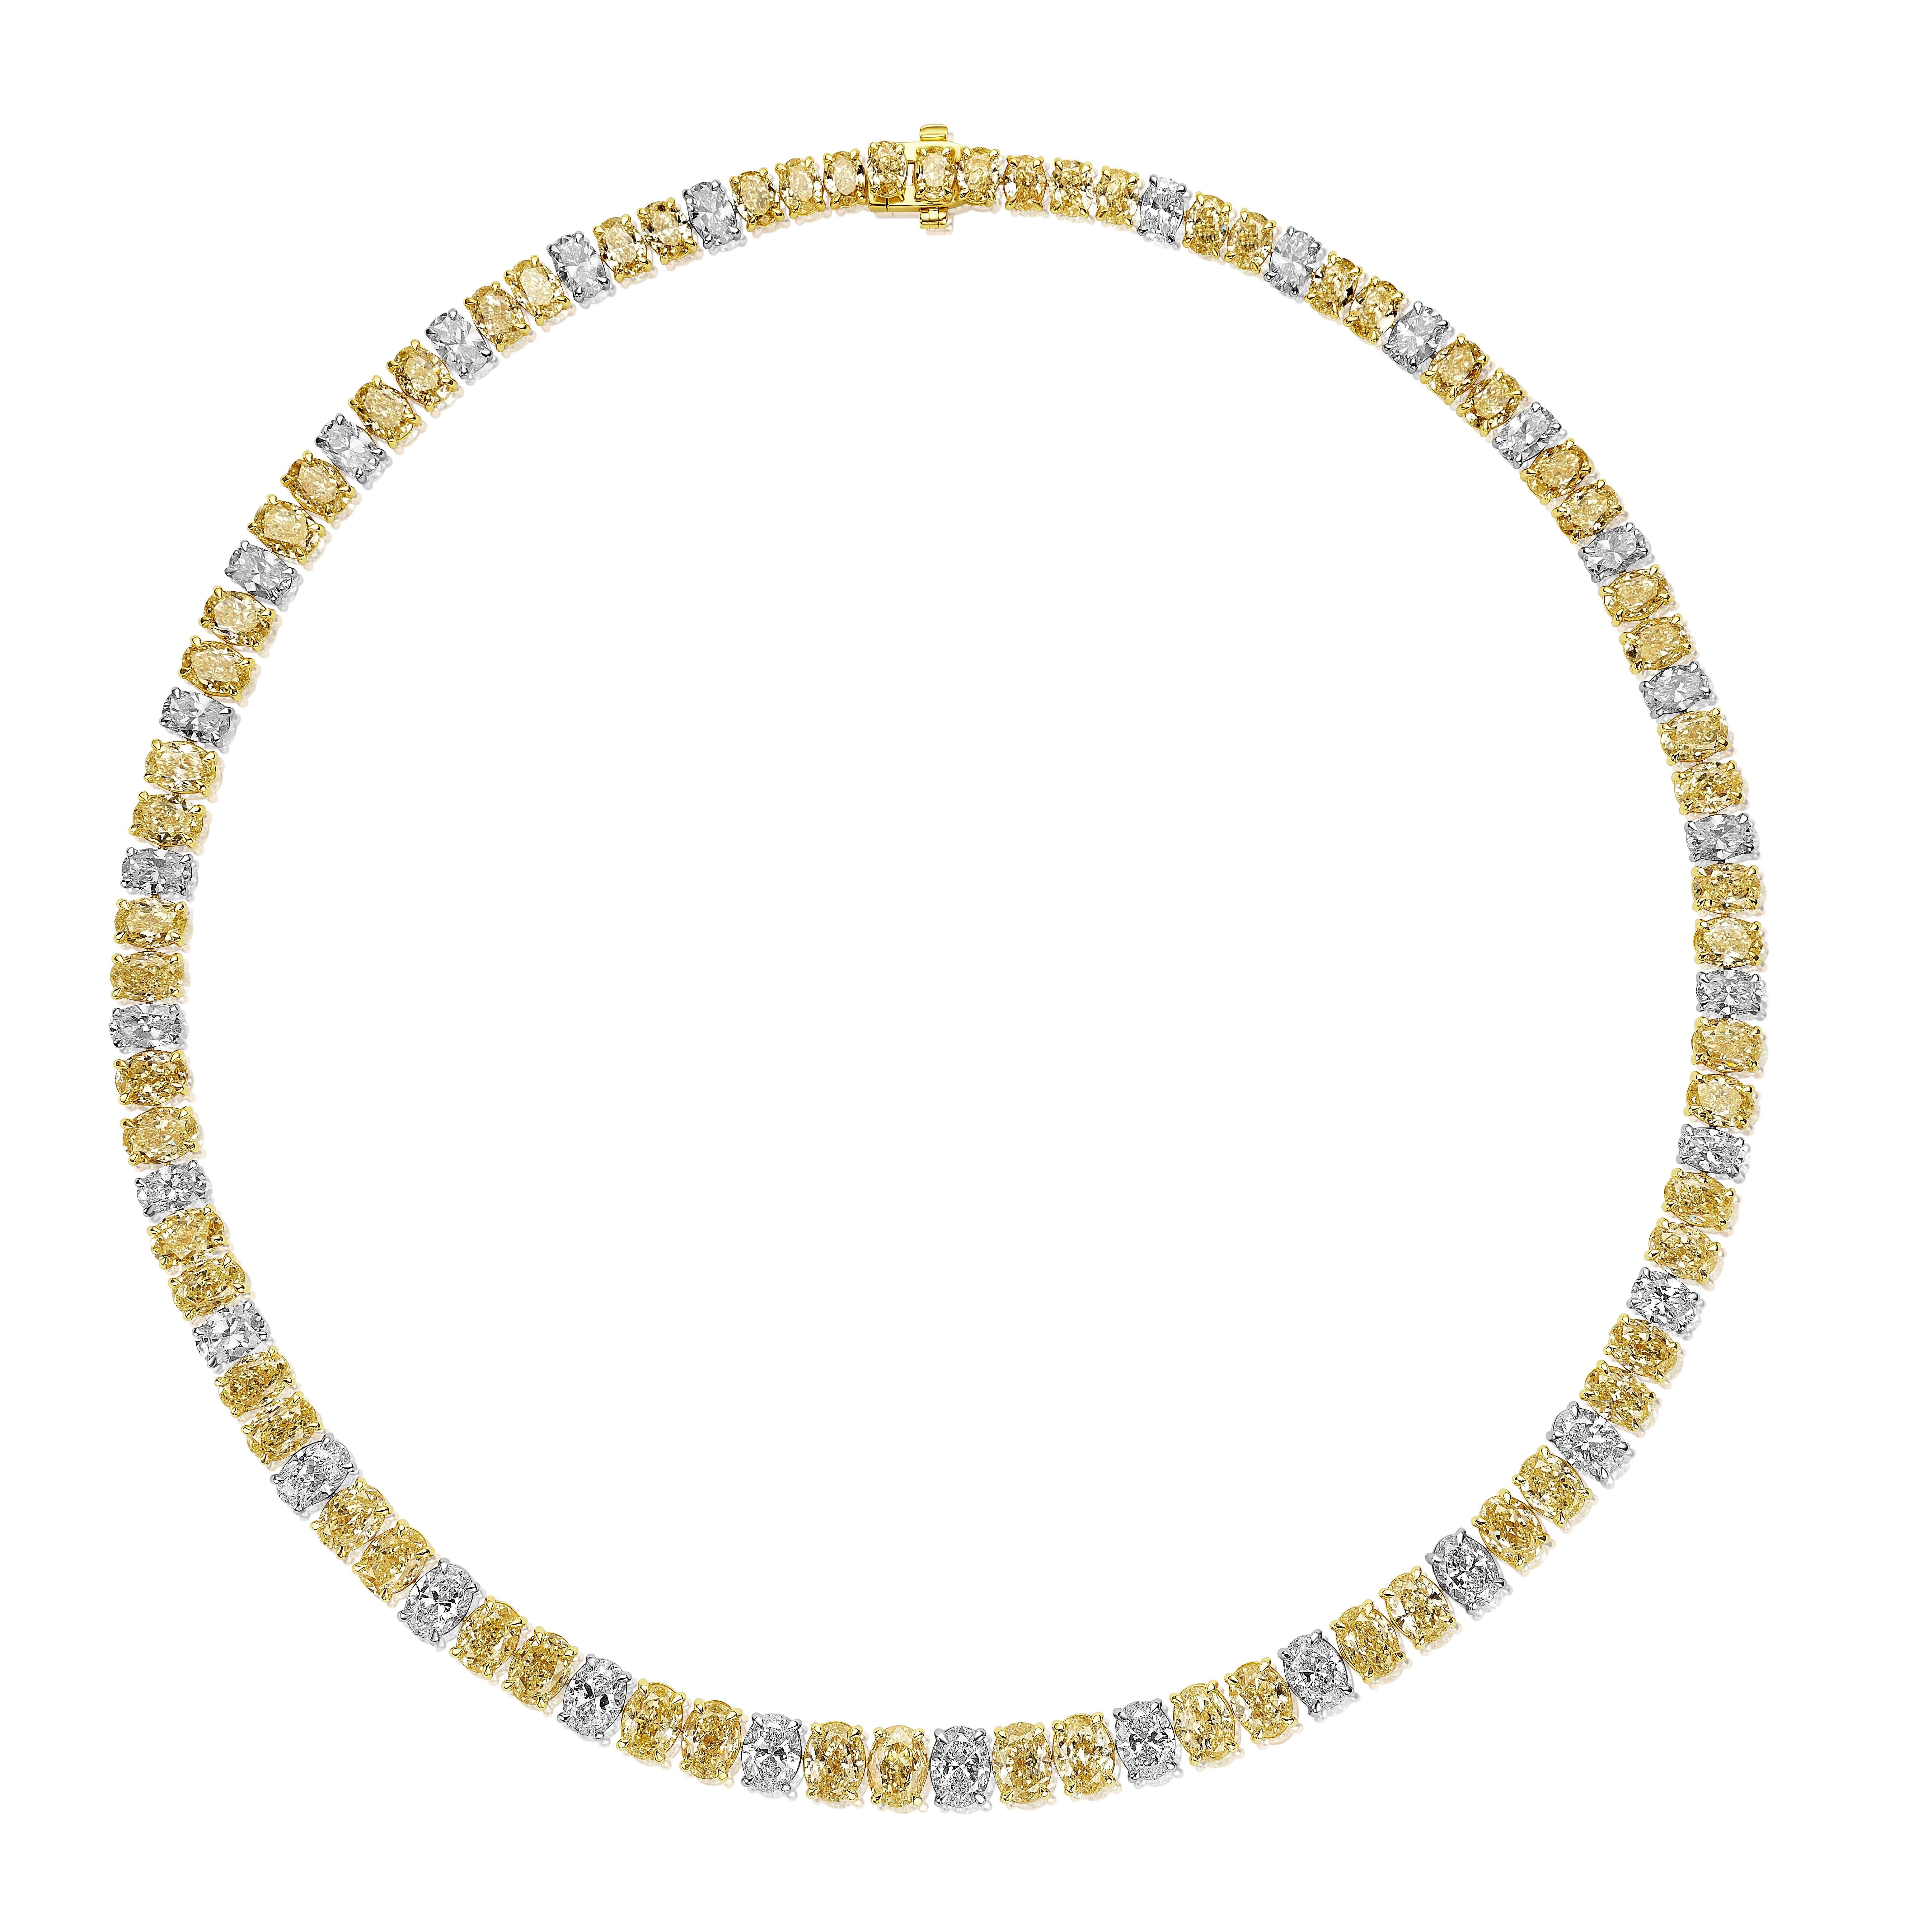 yellow diamond necklace set